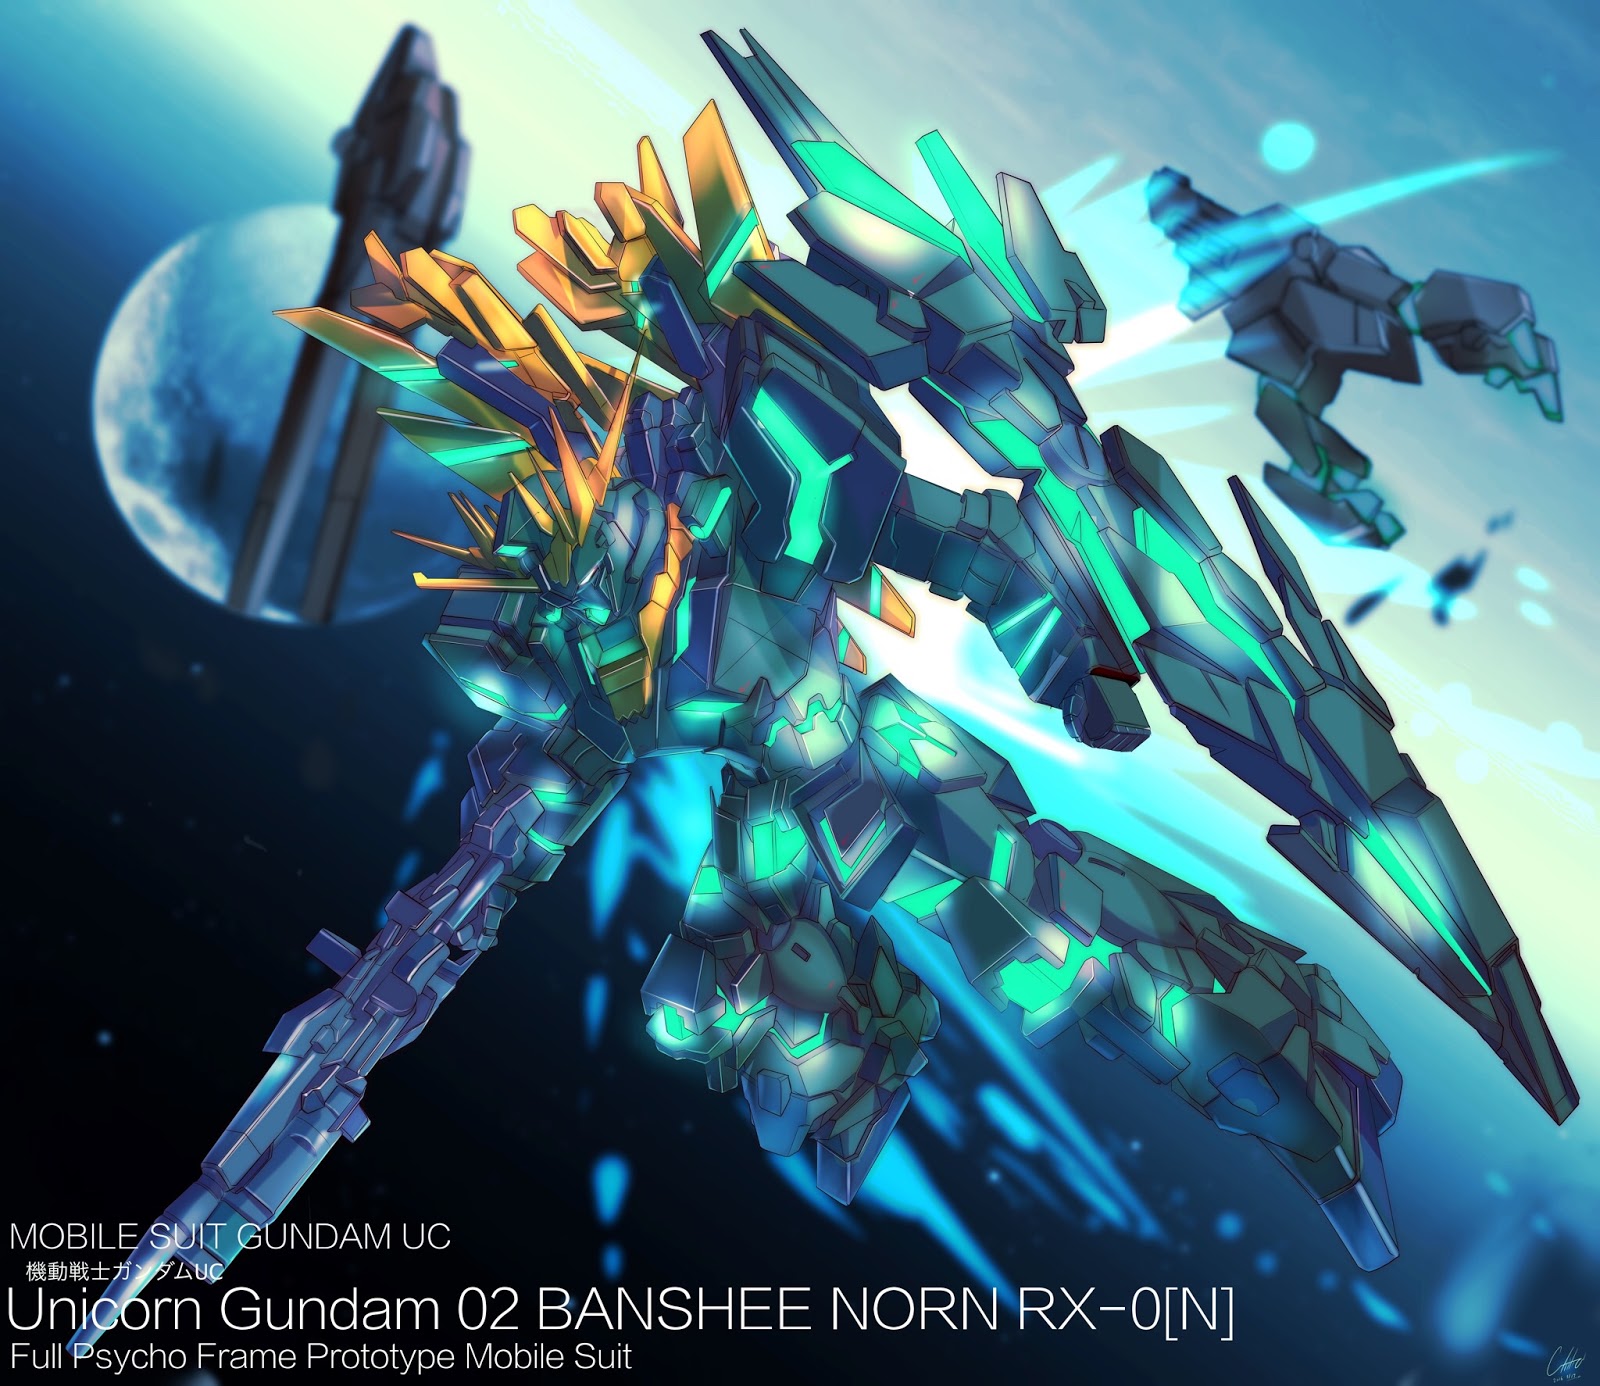 GUNDAM GUY Awesome Gundam Digital Artworks Updated 8 7 16